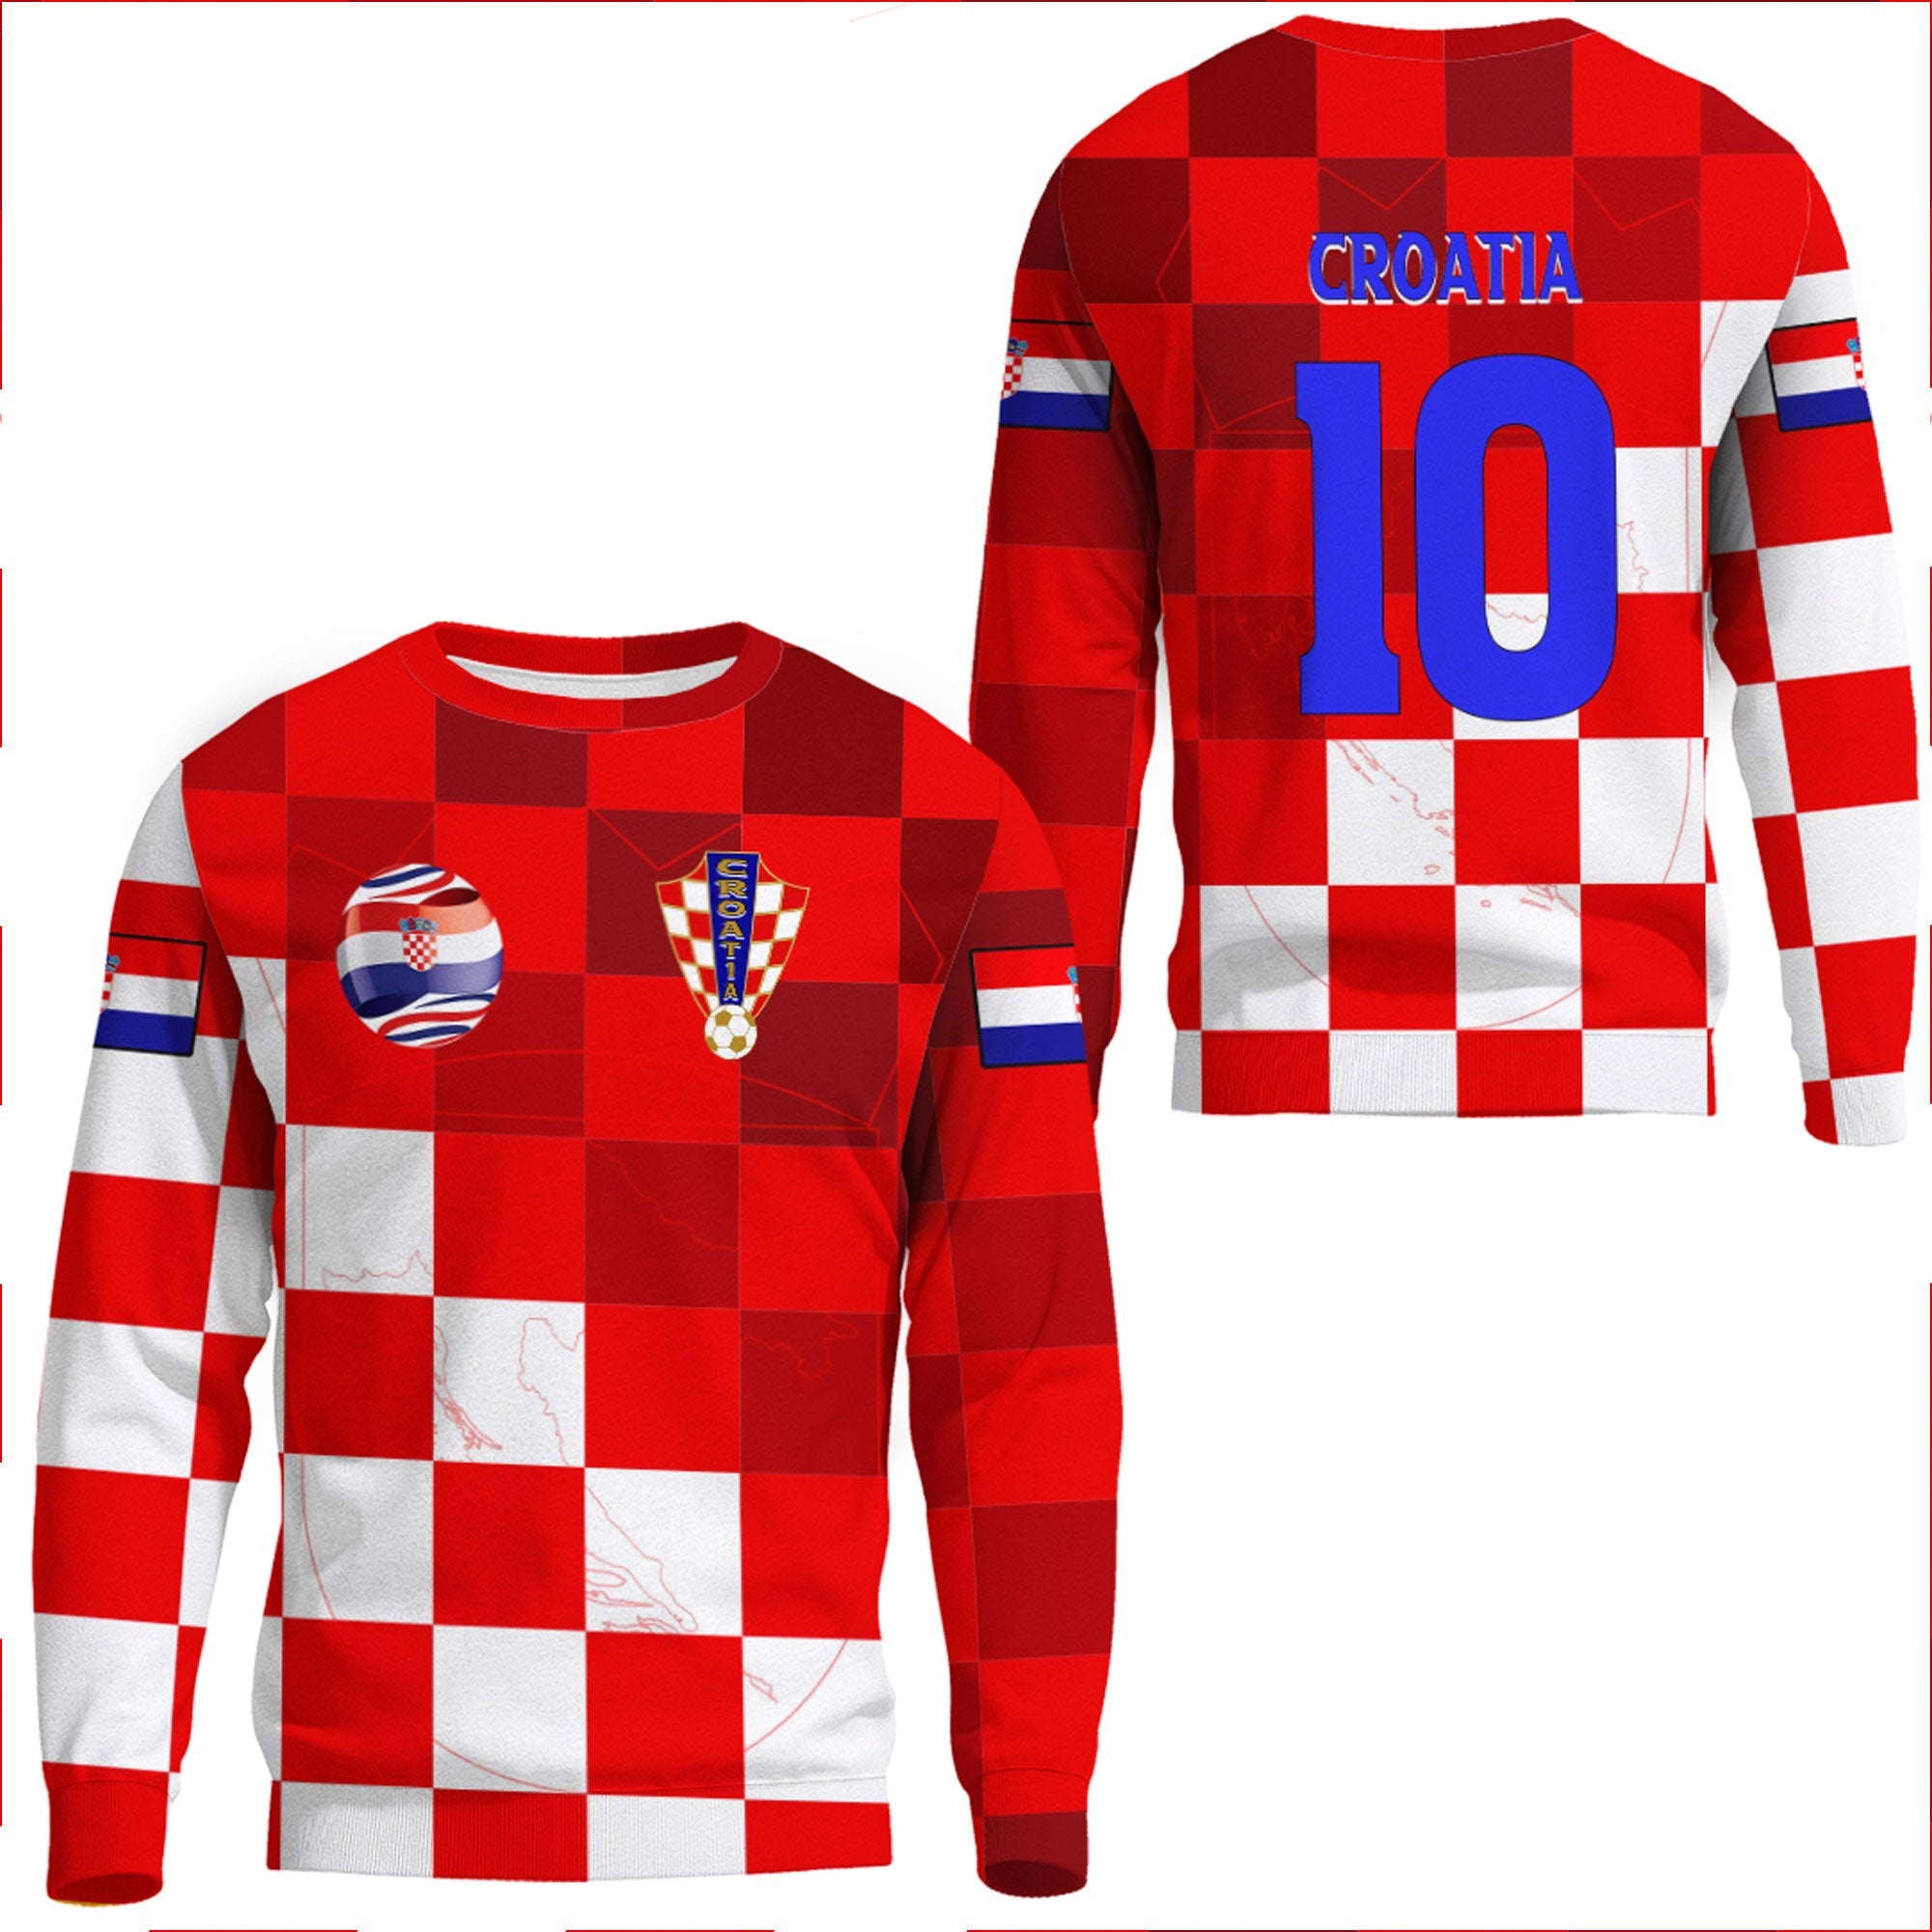 croatia-soccer-style-sweatshirts